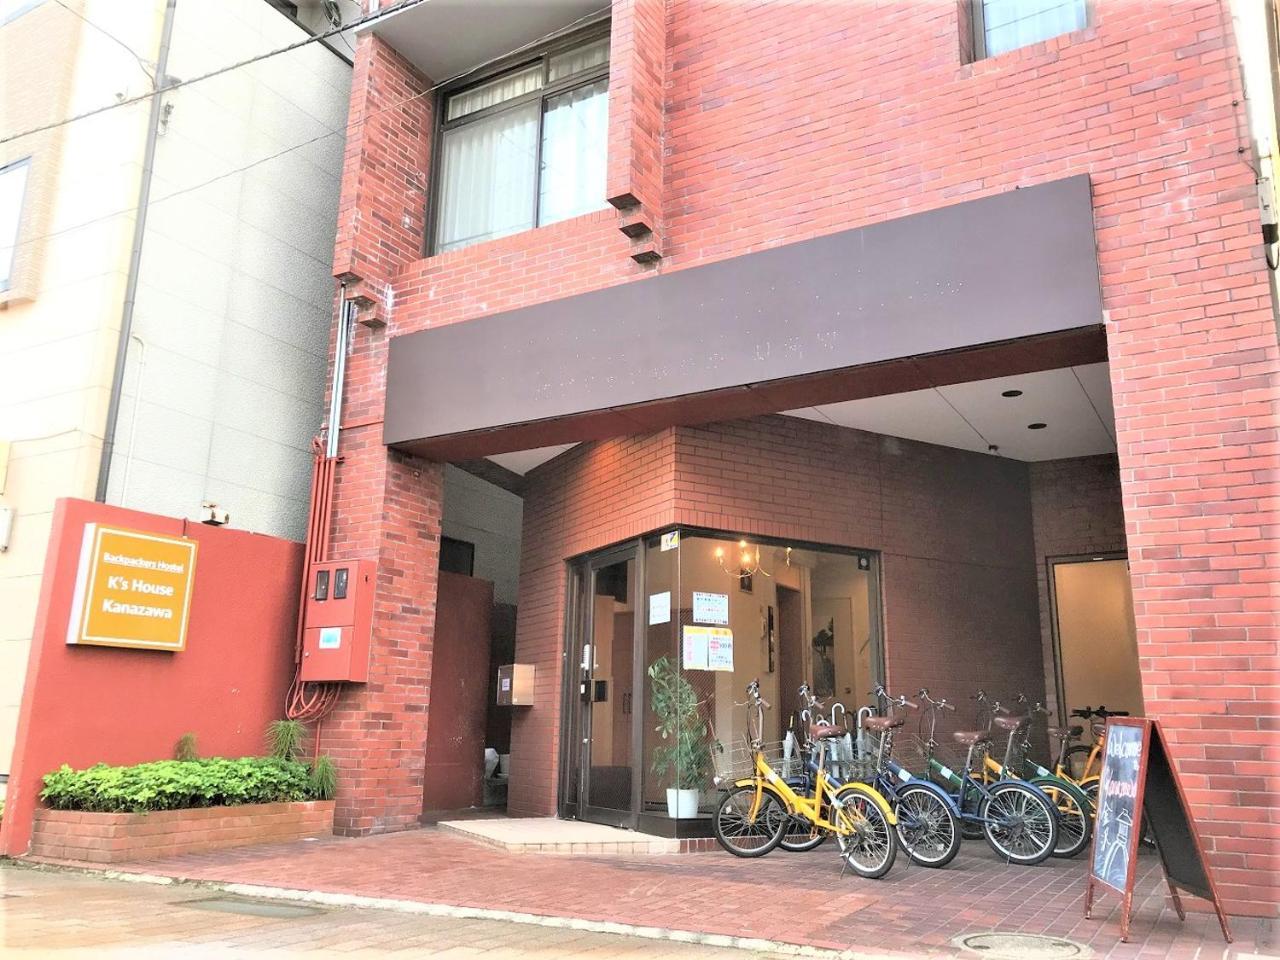 K'S House Kanazawa - Travelers Hostel Exterior photo